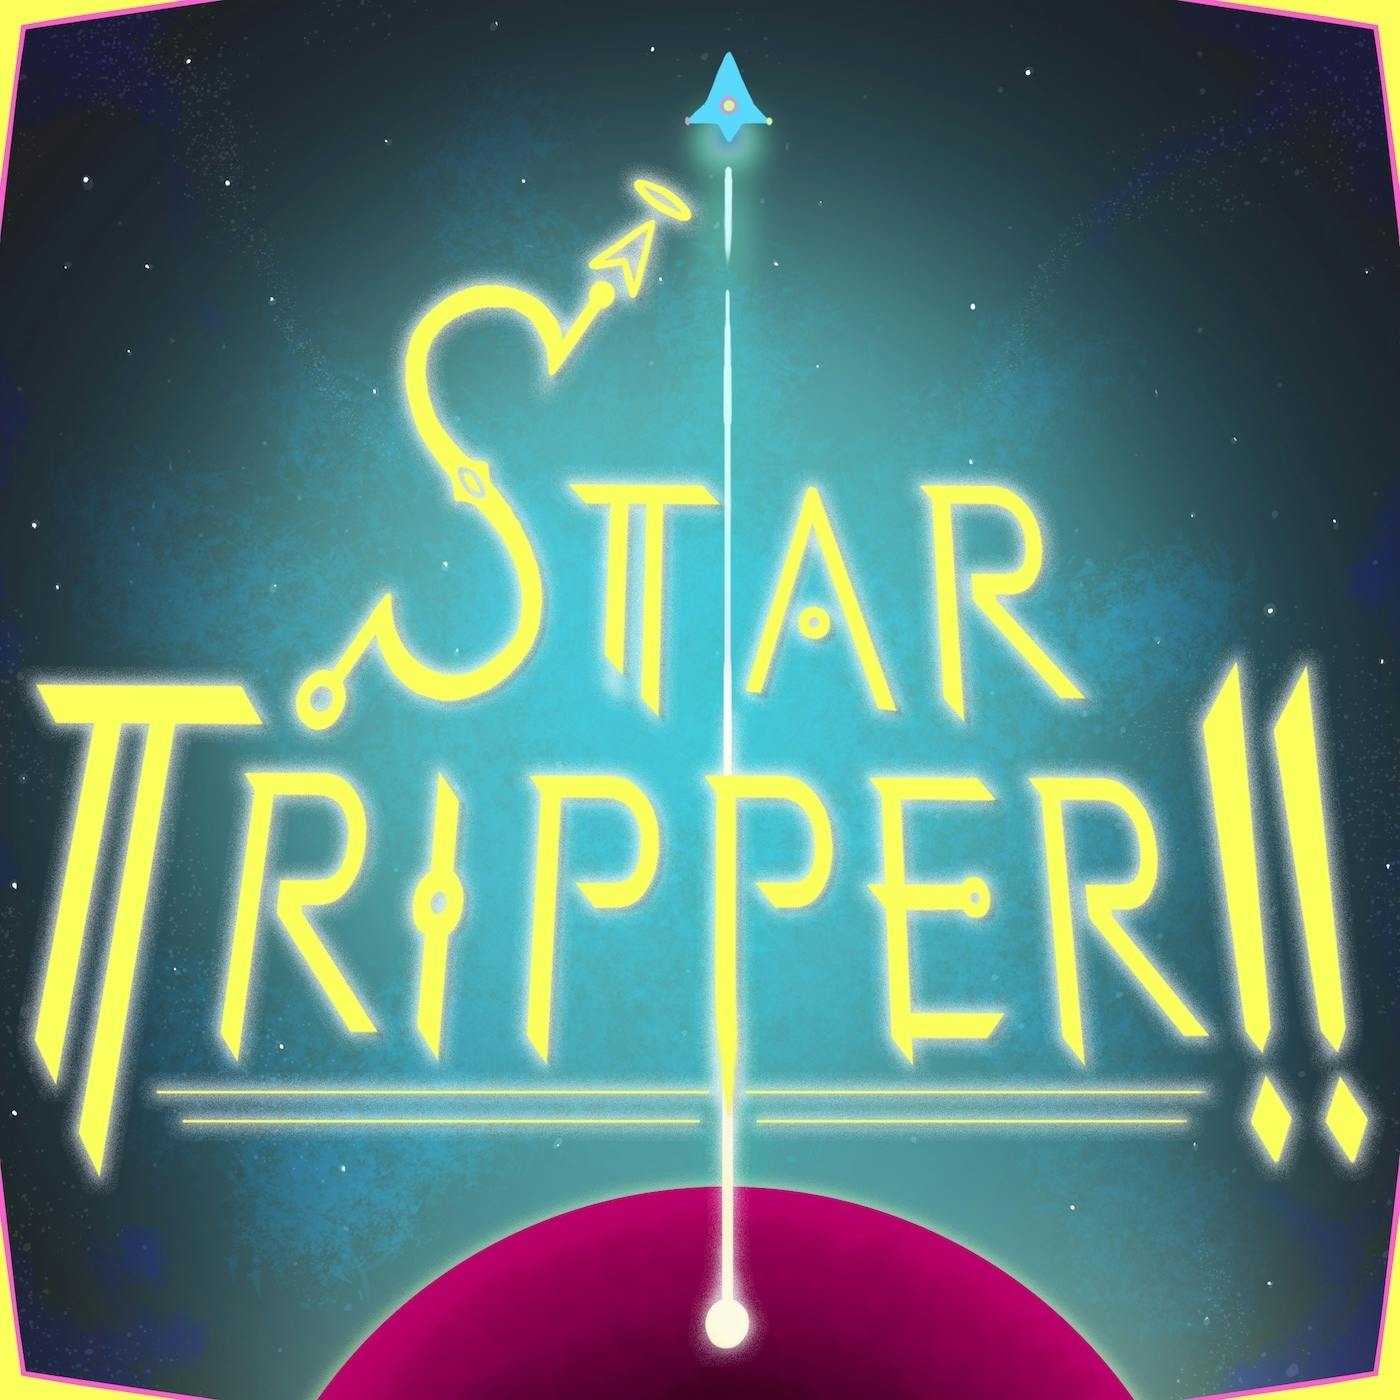 Presenting: StarTripper!!